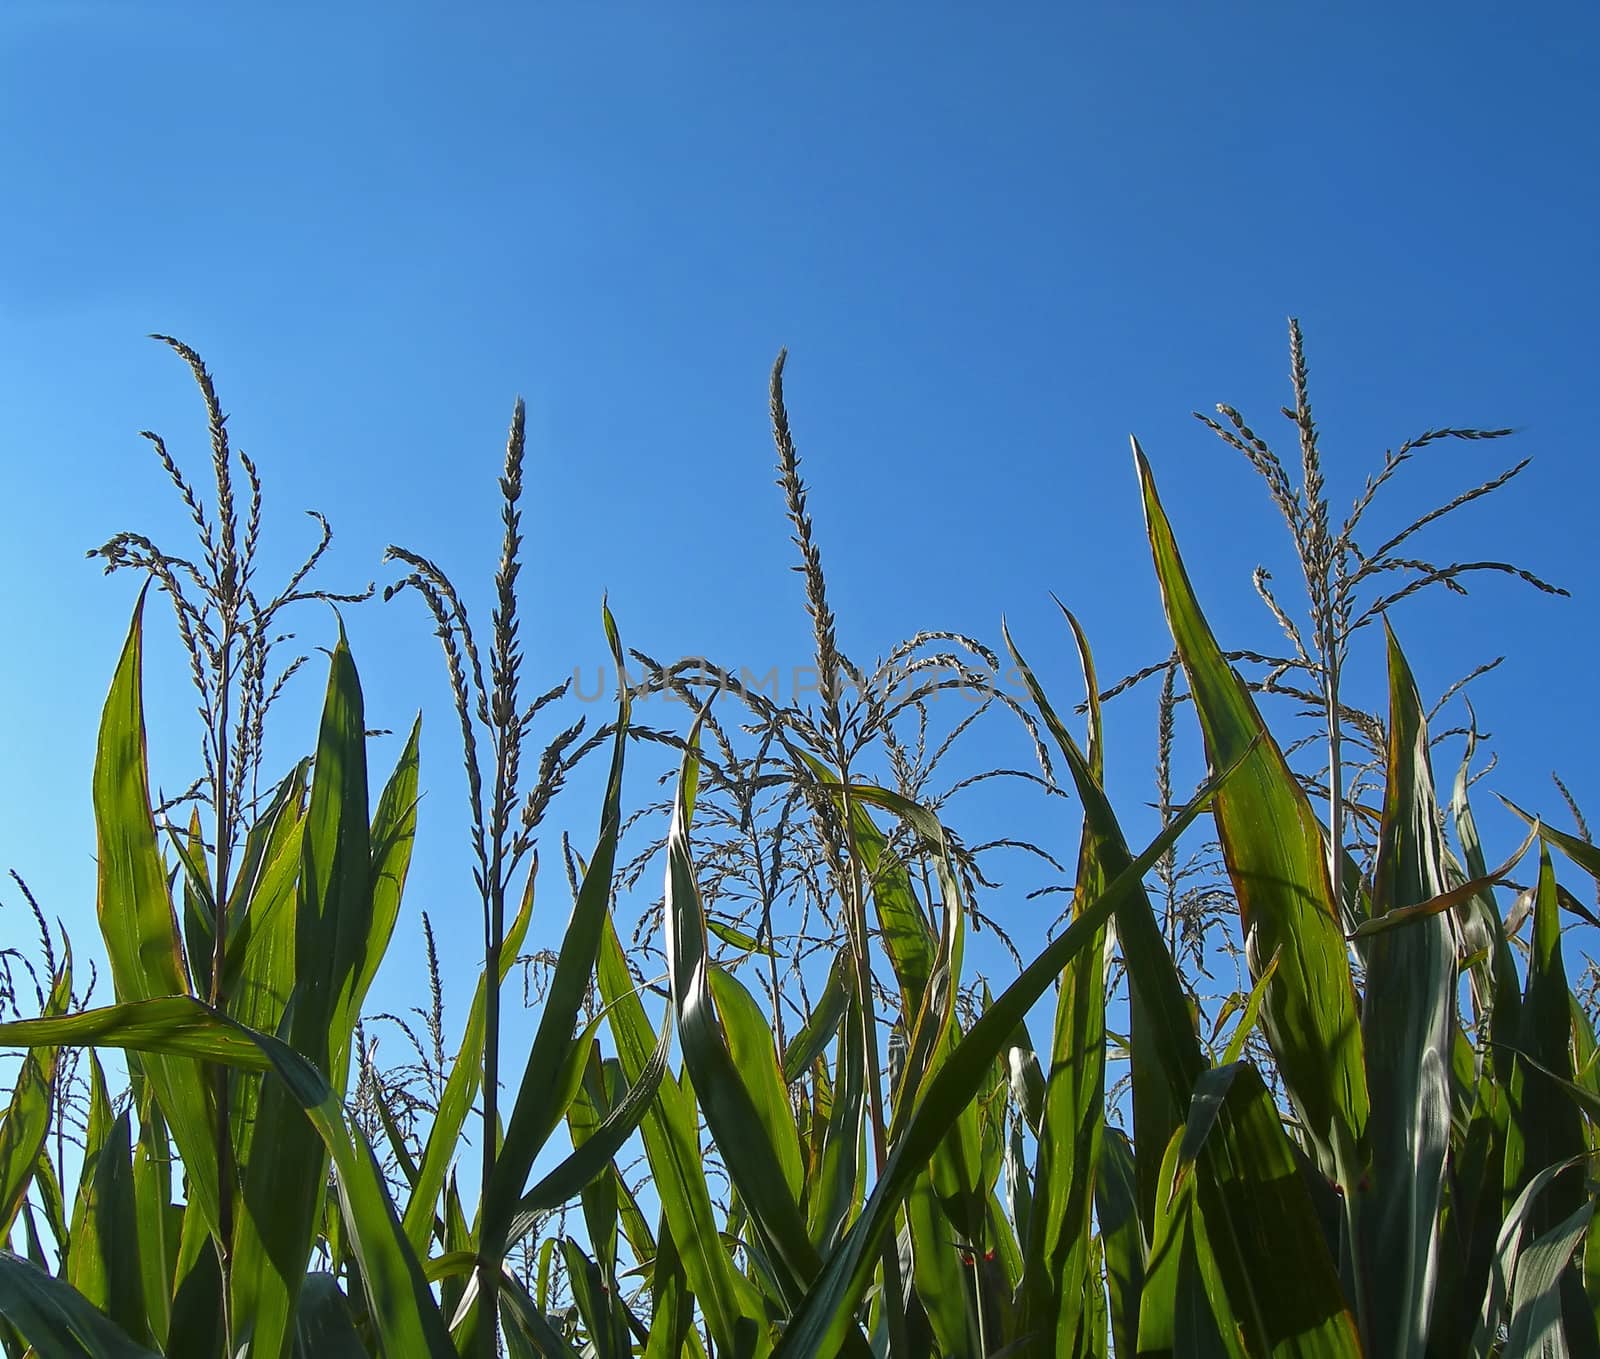 cornfield on a sunny day against a blue sky